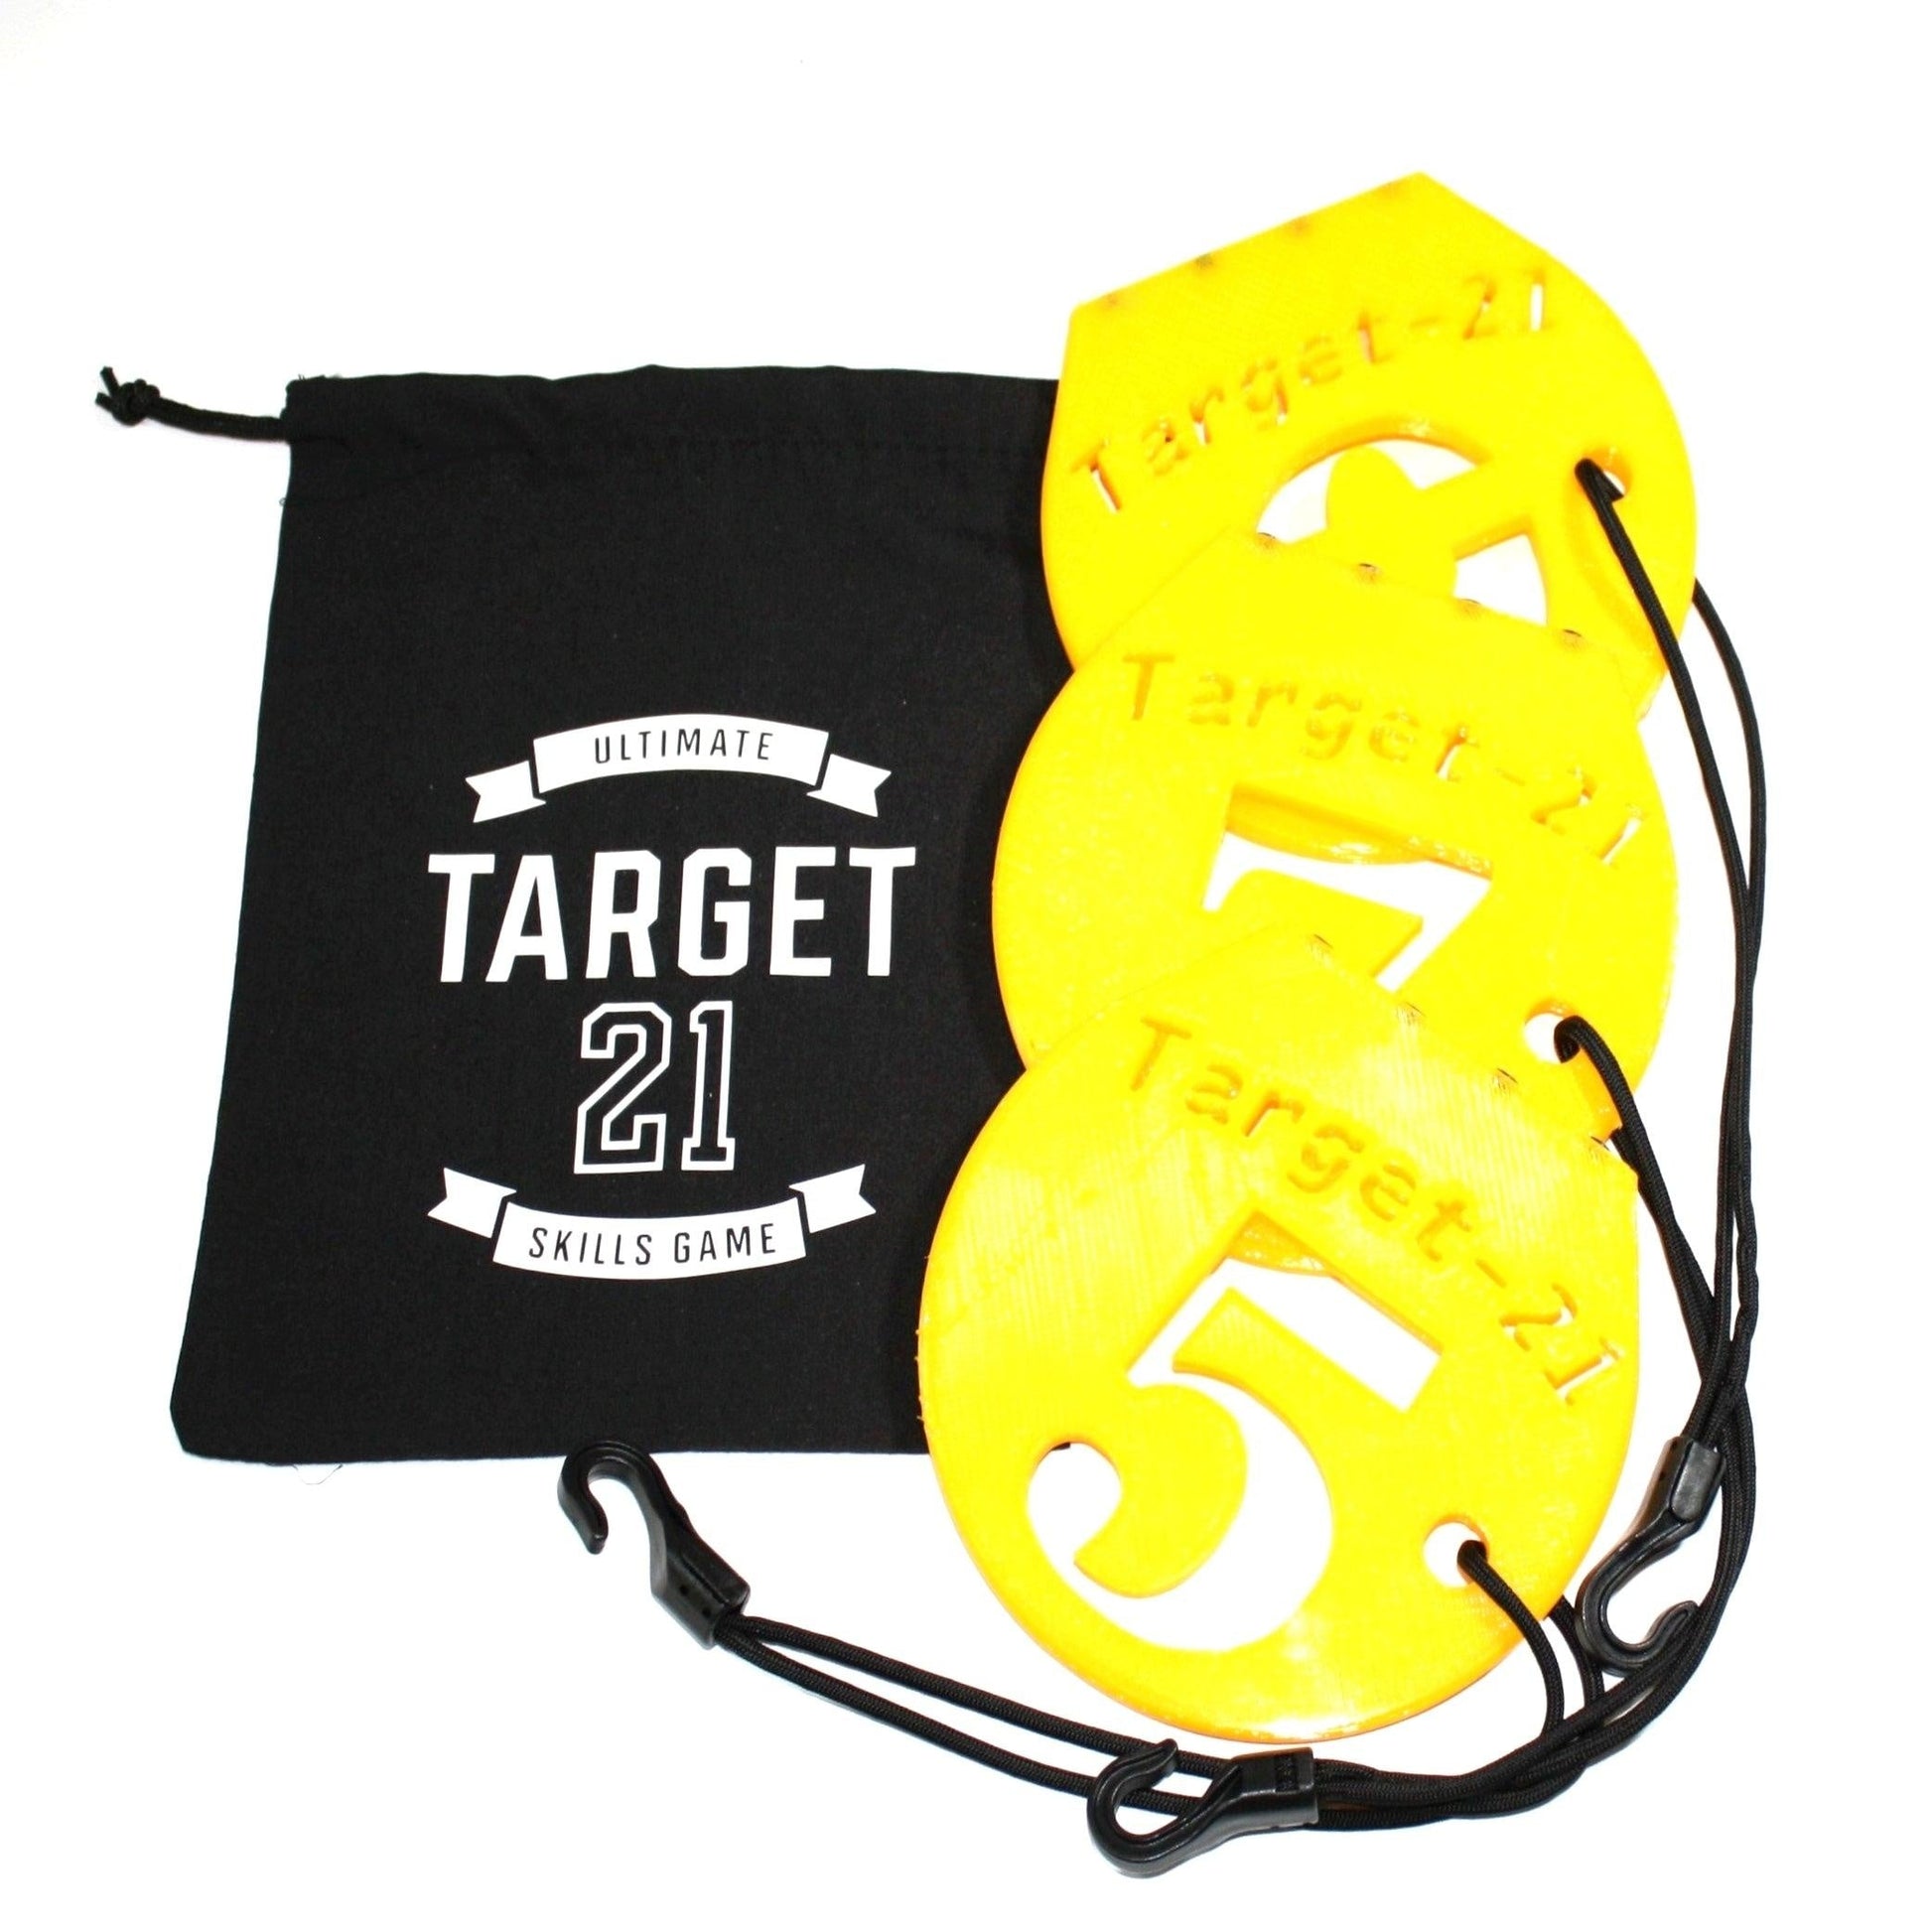 Target-21 Ultimate Magnetic Hockey Shooting Targets Skills Game Training Aid! - 3DWorxs